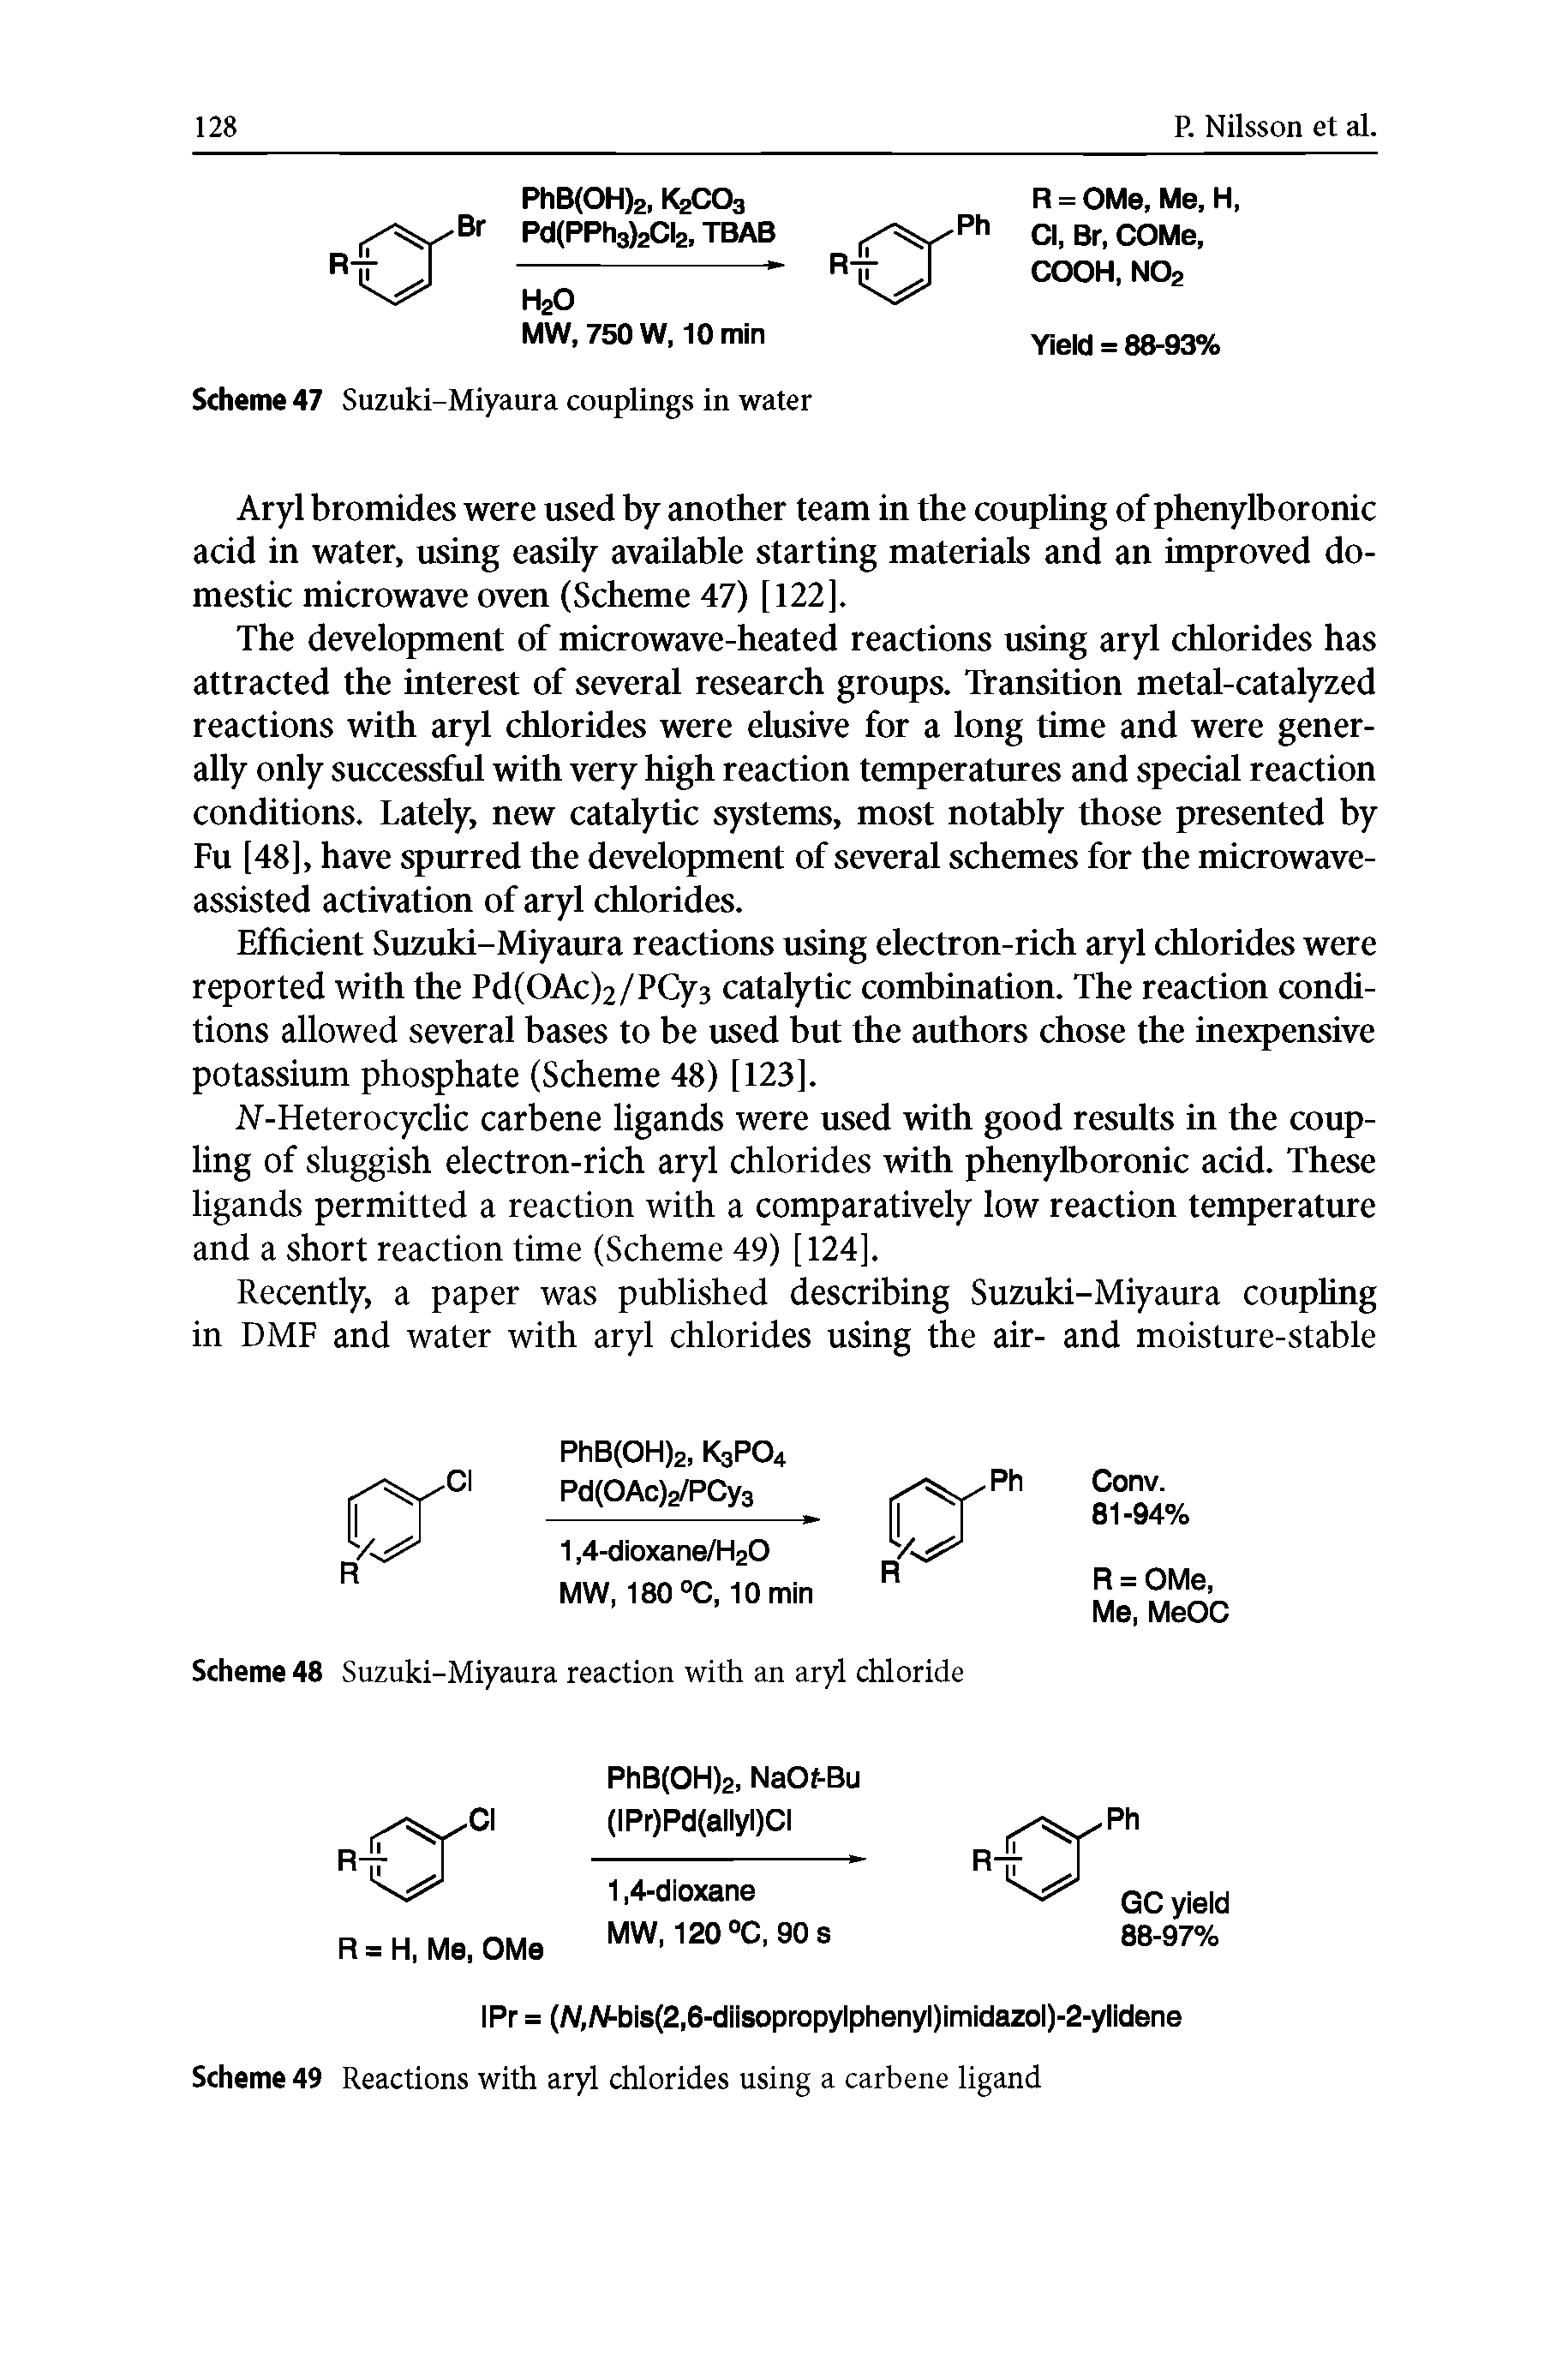 Scheme 48 Suzuki-Miyaura reaction with an aryl chloride...